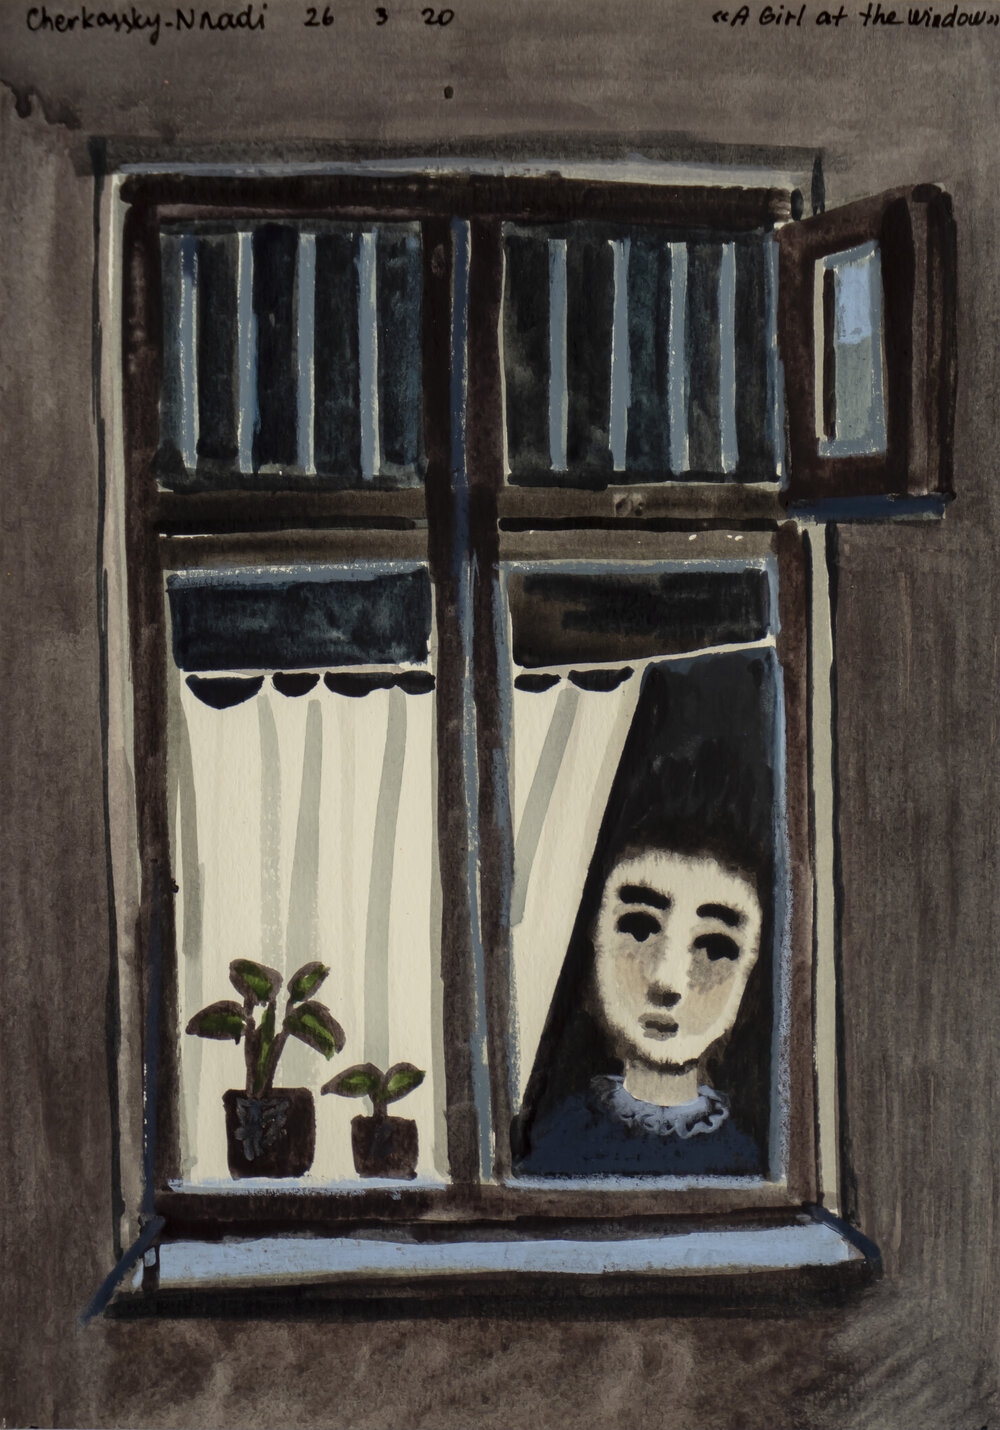 Zoya Cherkassky, A Girl at the Window, 2020